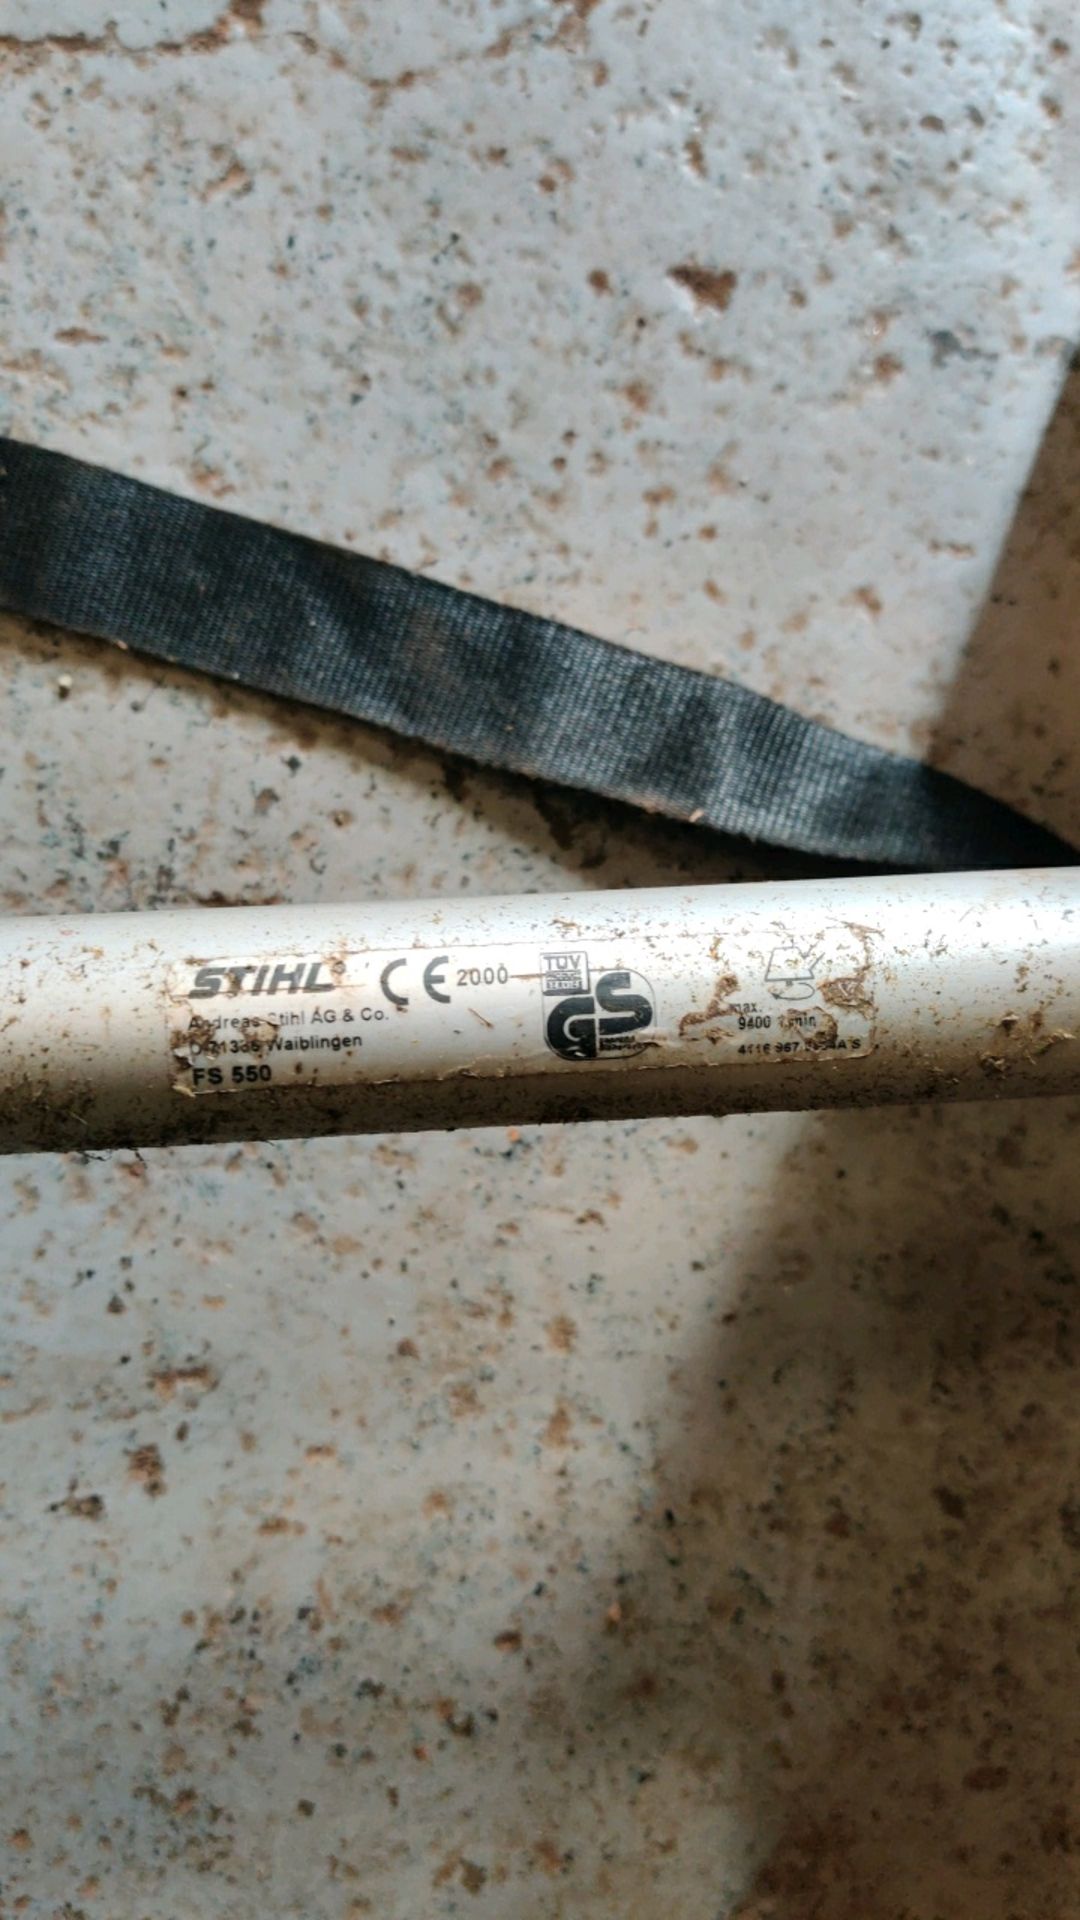 Stihl FS 550 brush cutter - Image 4 of 5